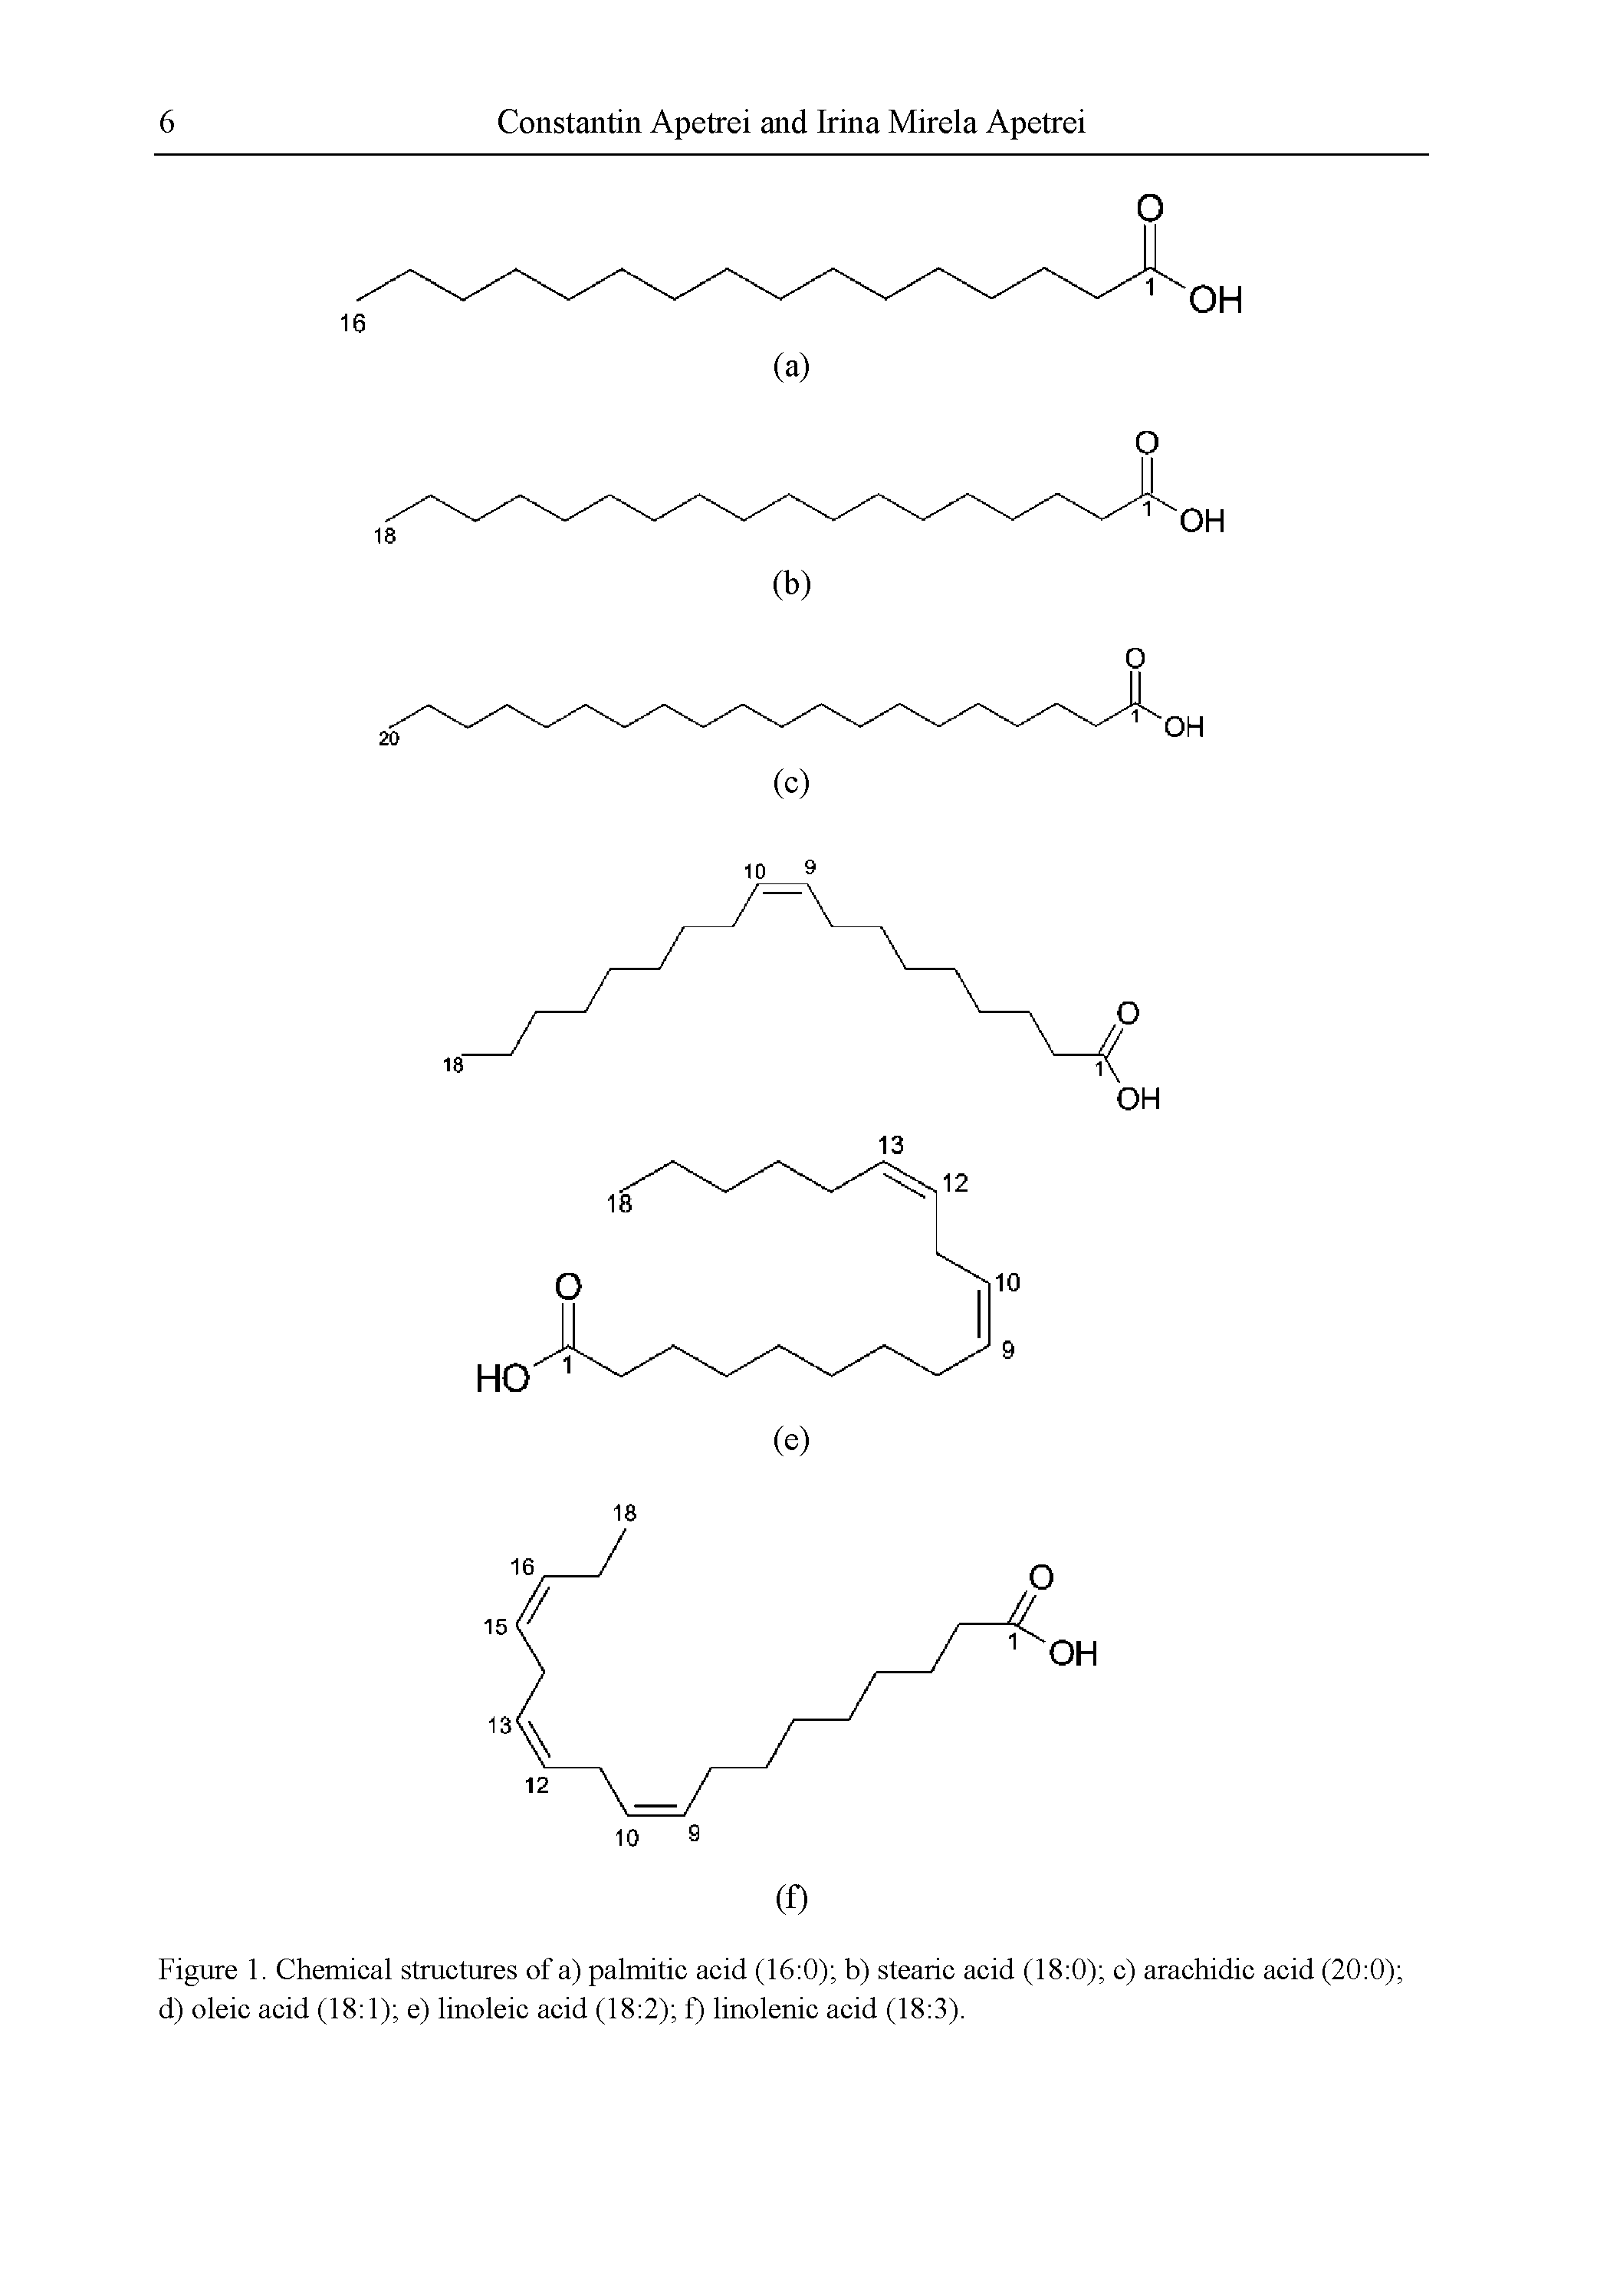 Figure 1. Chemical structures of a) palmitic acid (16 0) b) stearic acid (18 0) c) arachidic acid (20 0) d) oleic acid (18 1) e) linoleic acid (18 2) f) linolenic acid (18 3).